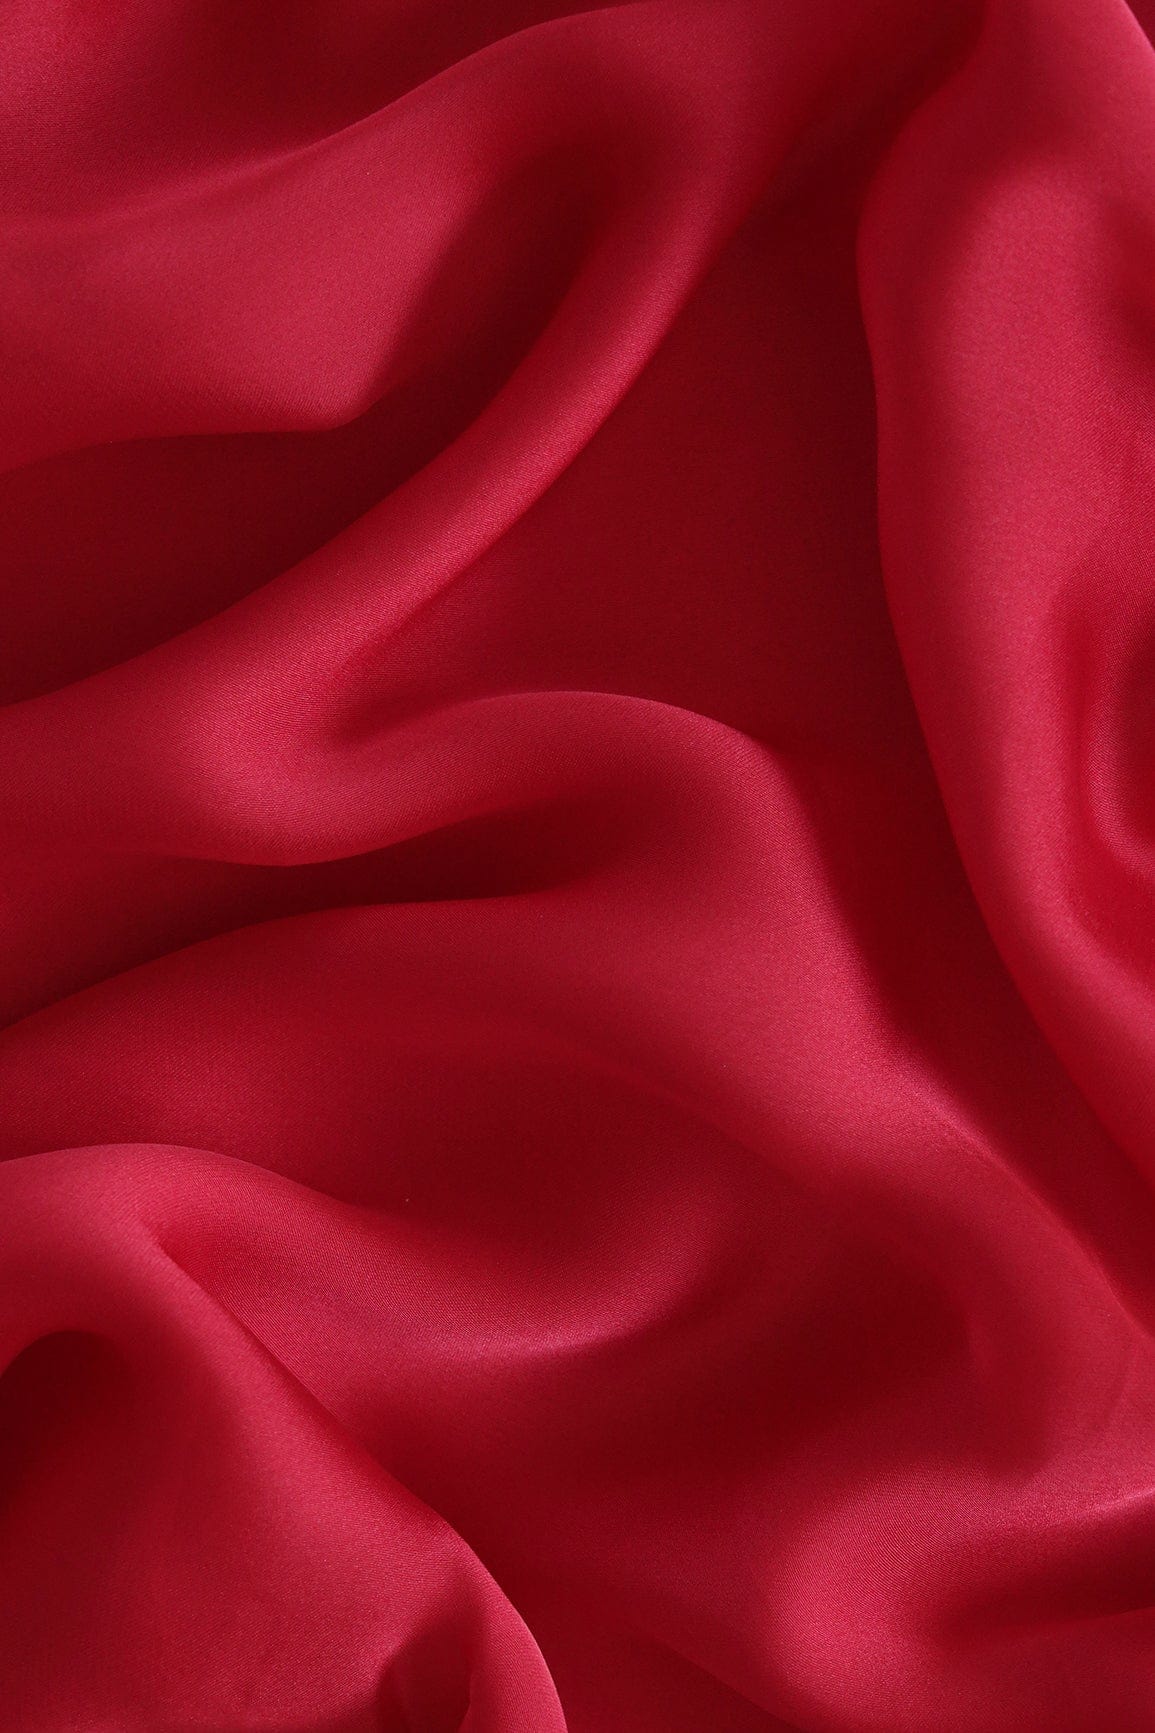 doeraa Plain Fabrics Cherry Red Dyed Georgette Satin Fabric